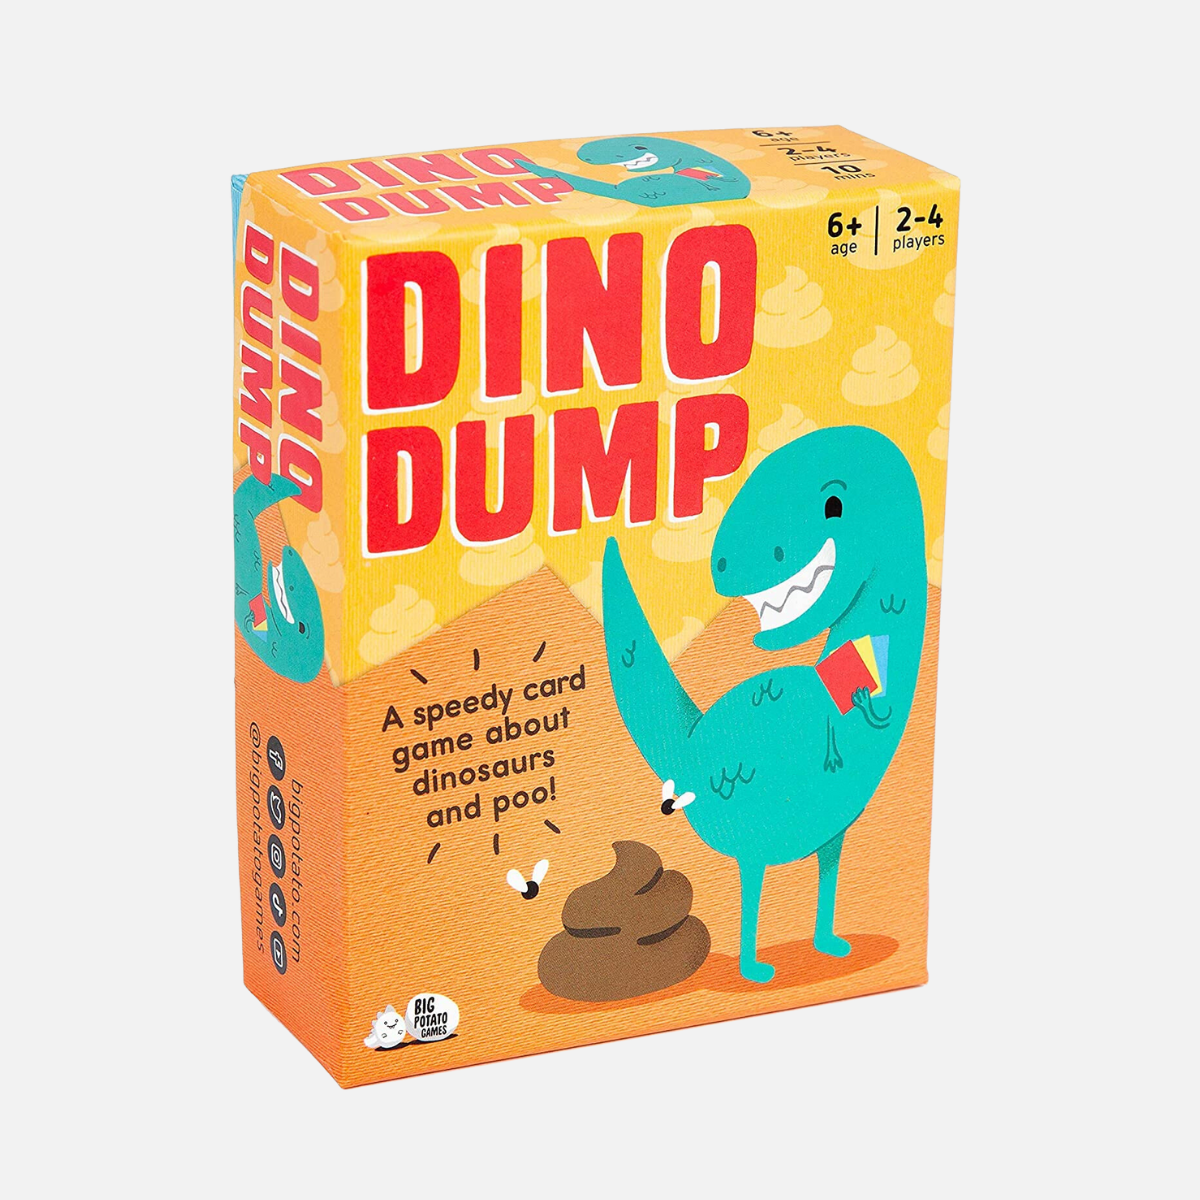 Dino Dump travel board game for kids